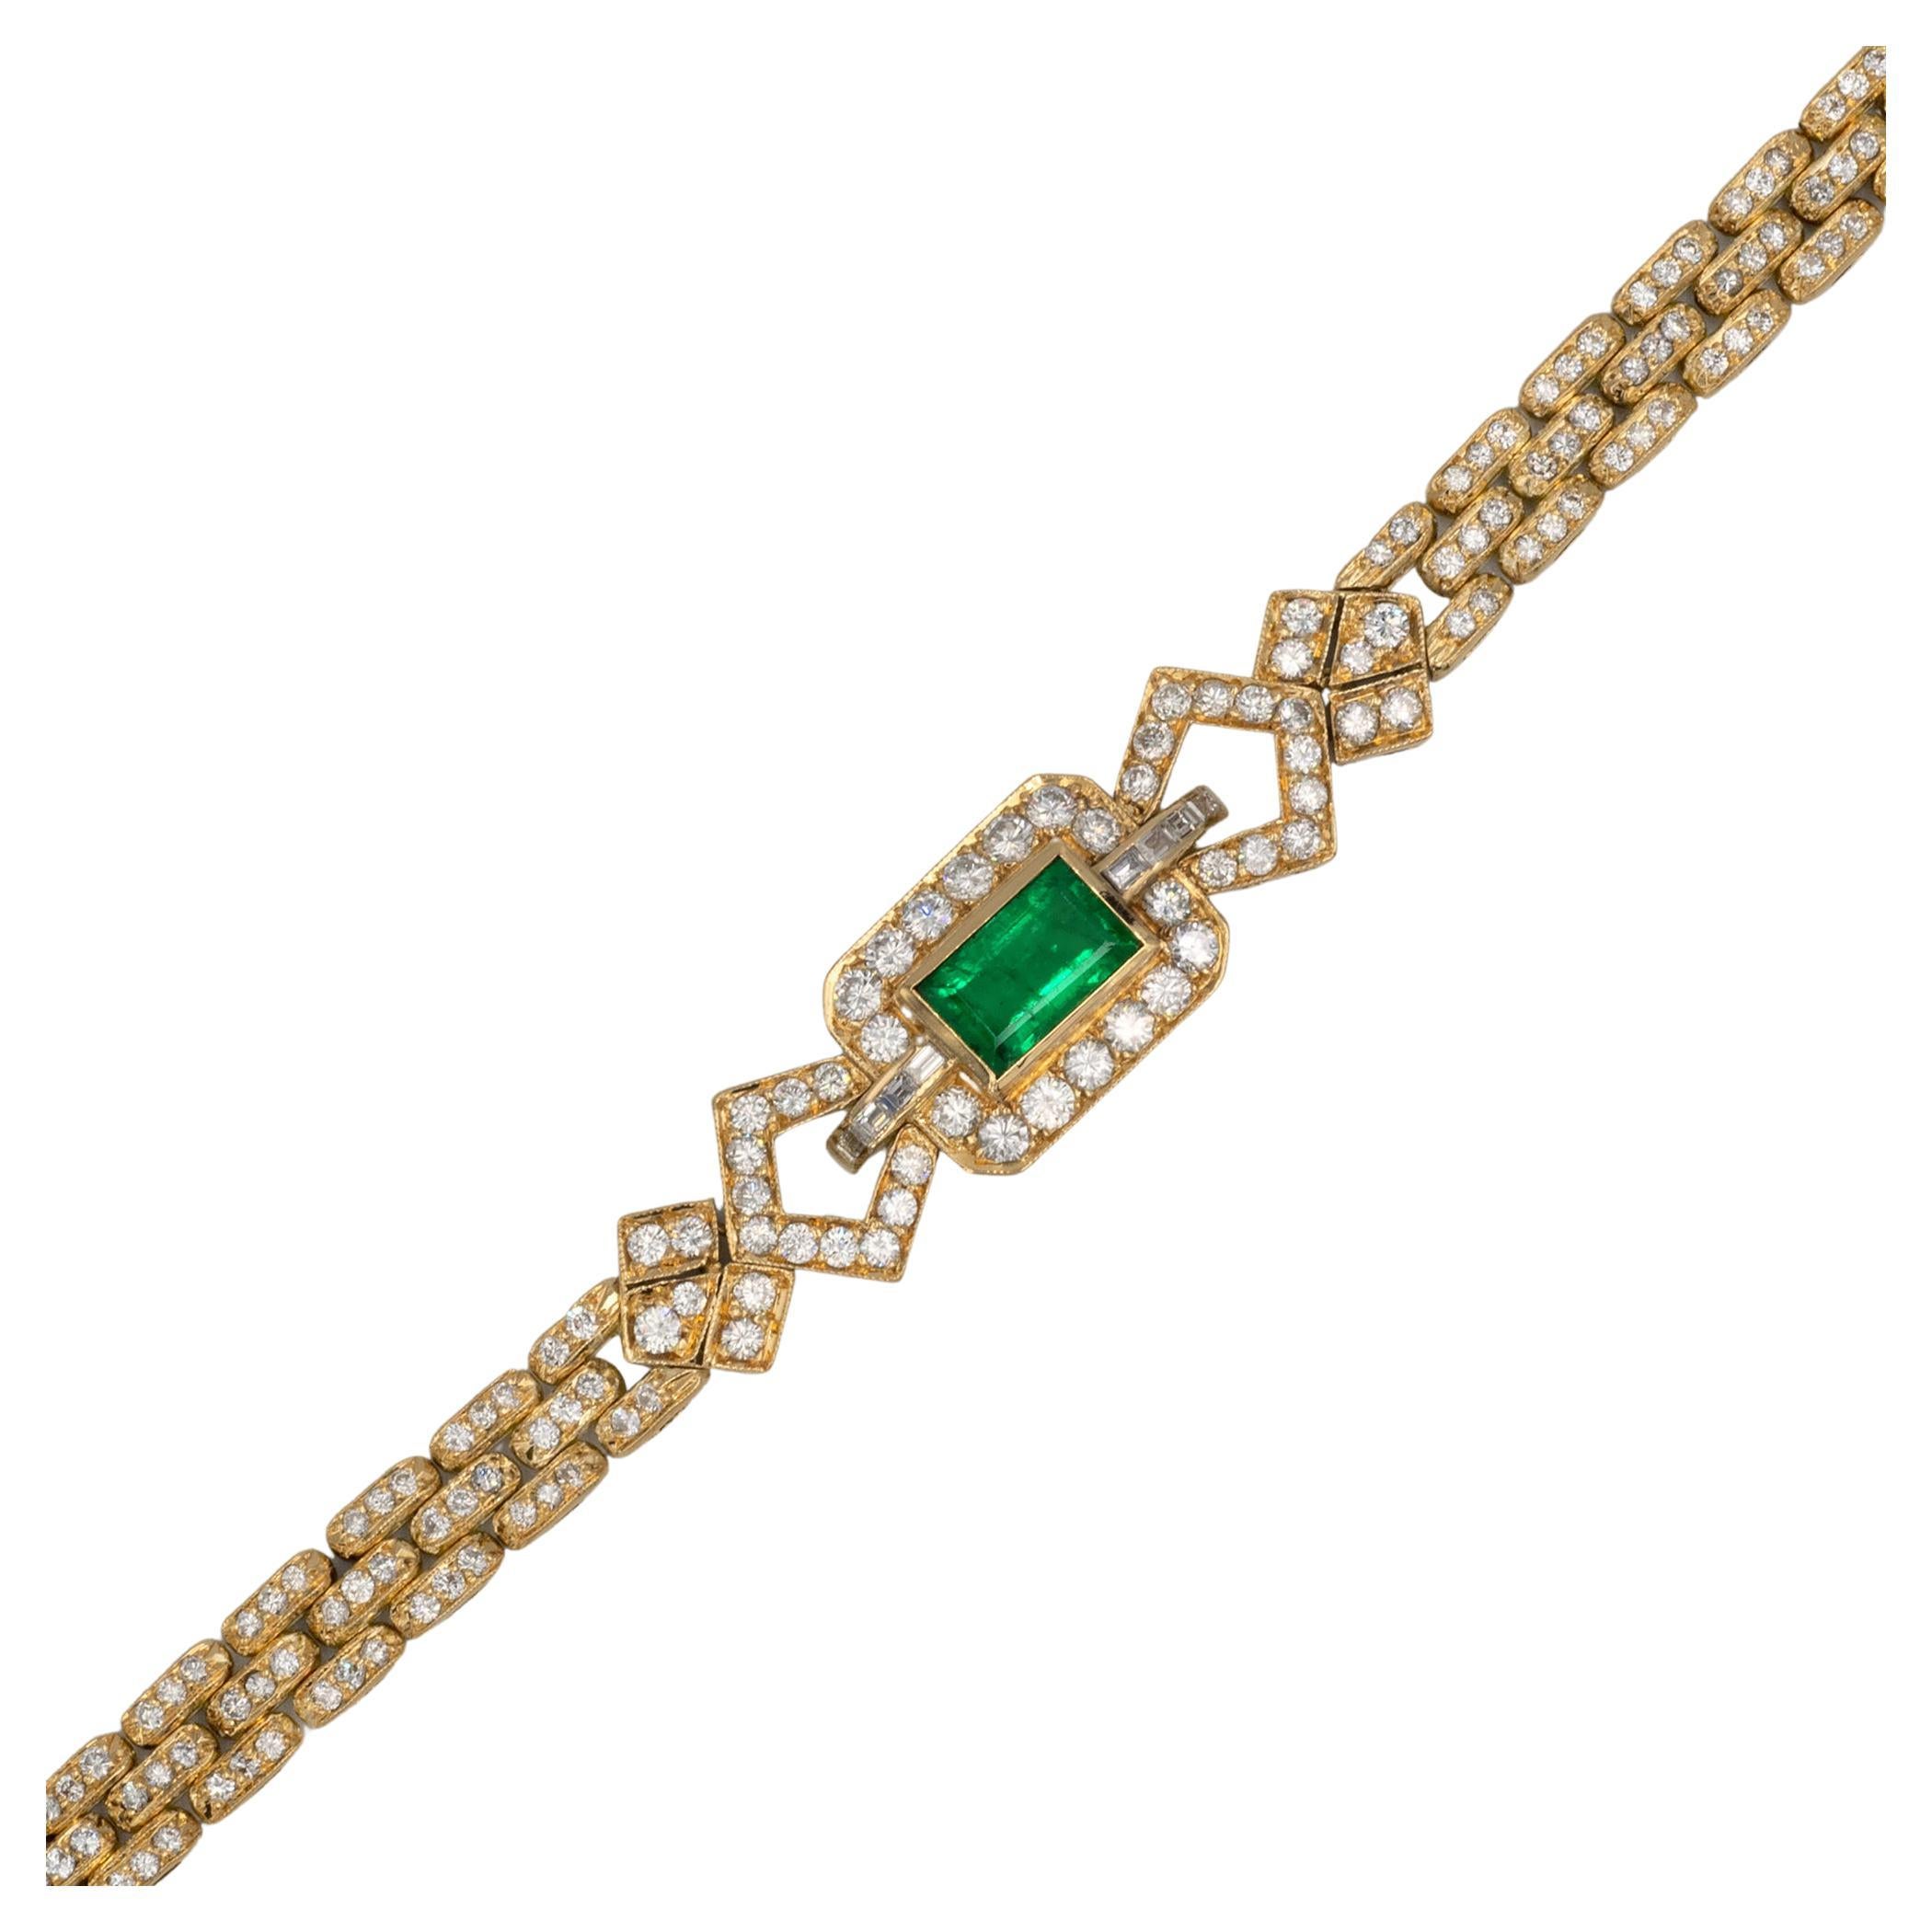 Certified 2.13 Carat Emerald and Diamond 18 Kt Gold Bracelet